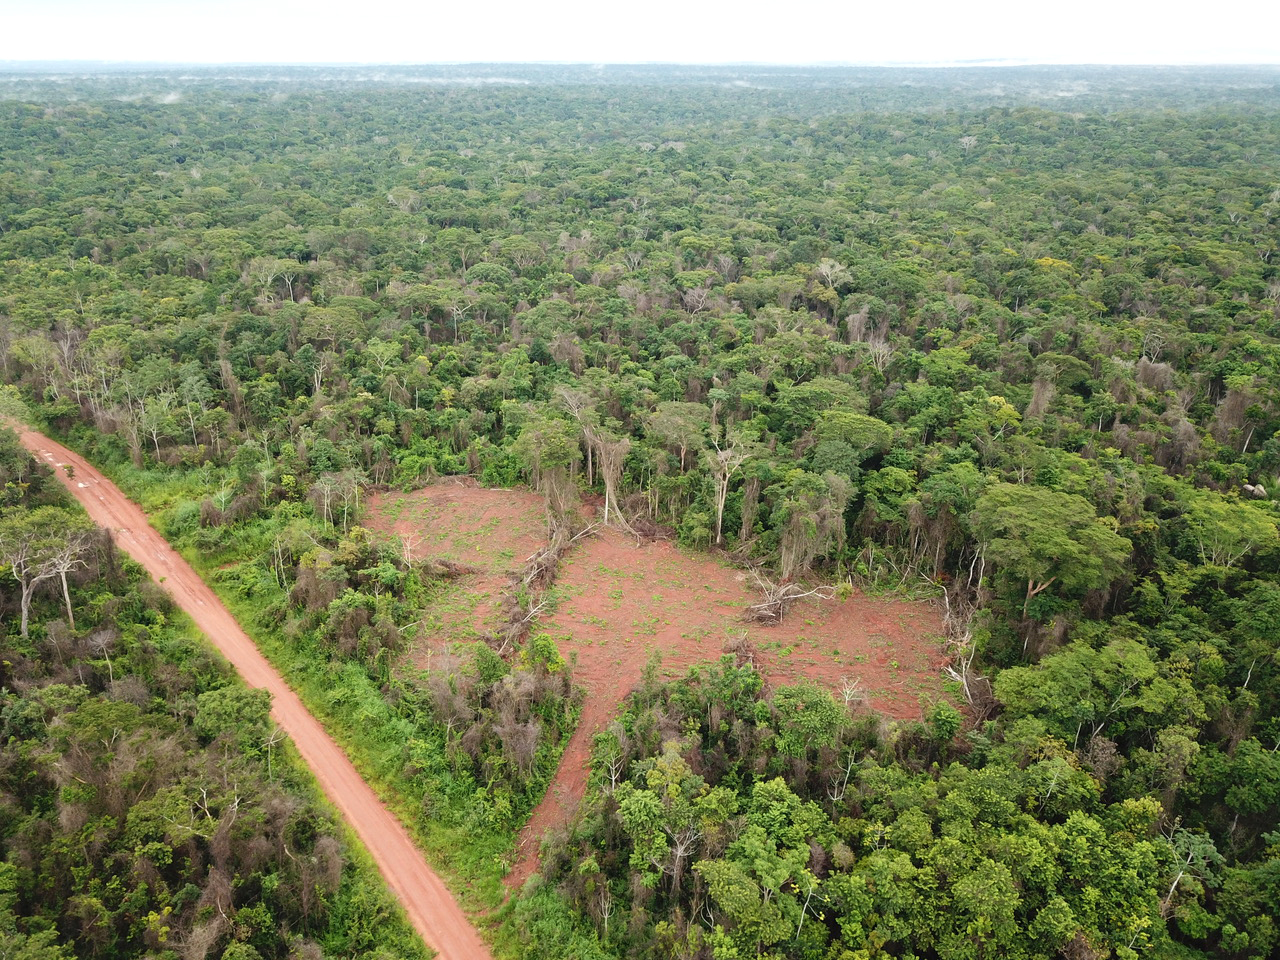 Amazon Bolivia illegal logging rainforest trust project